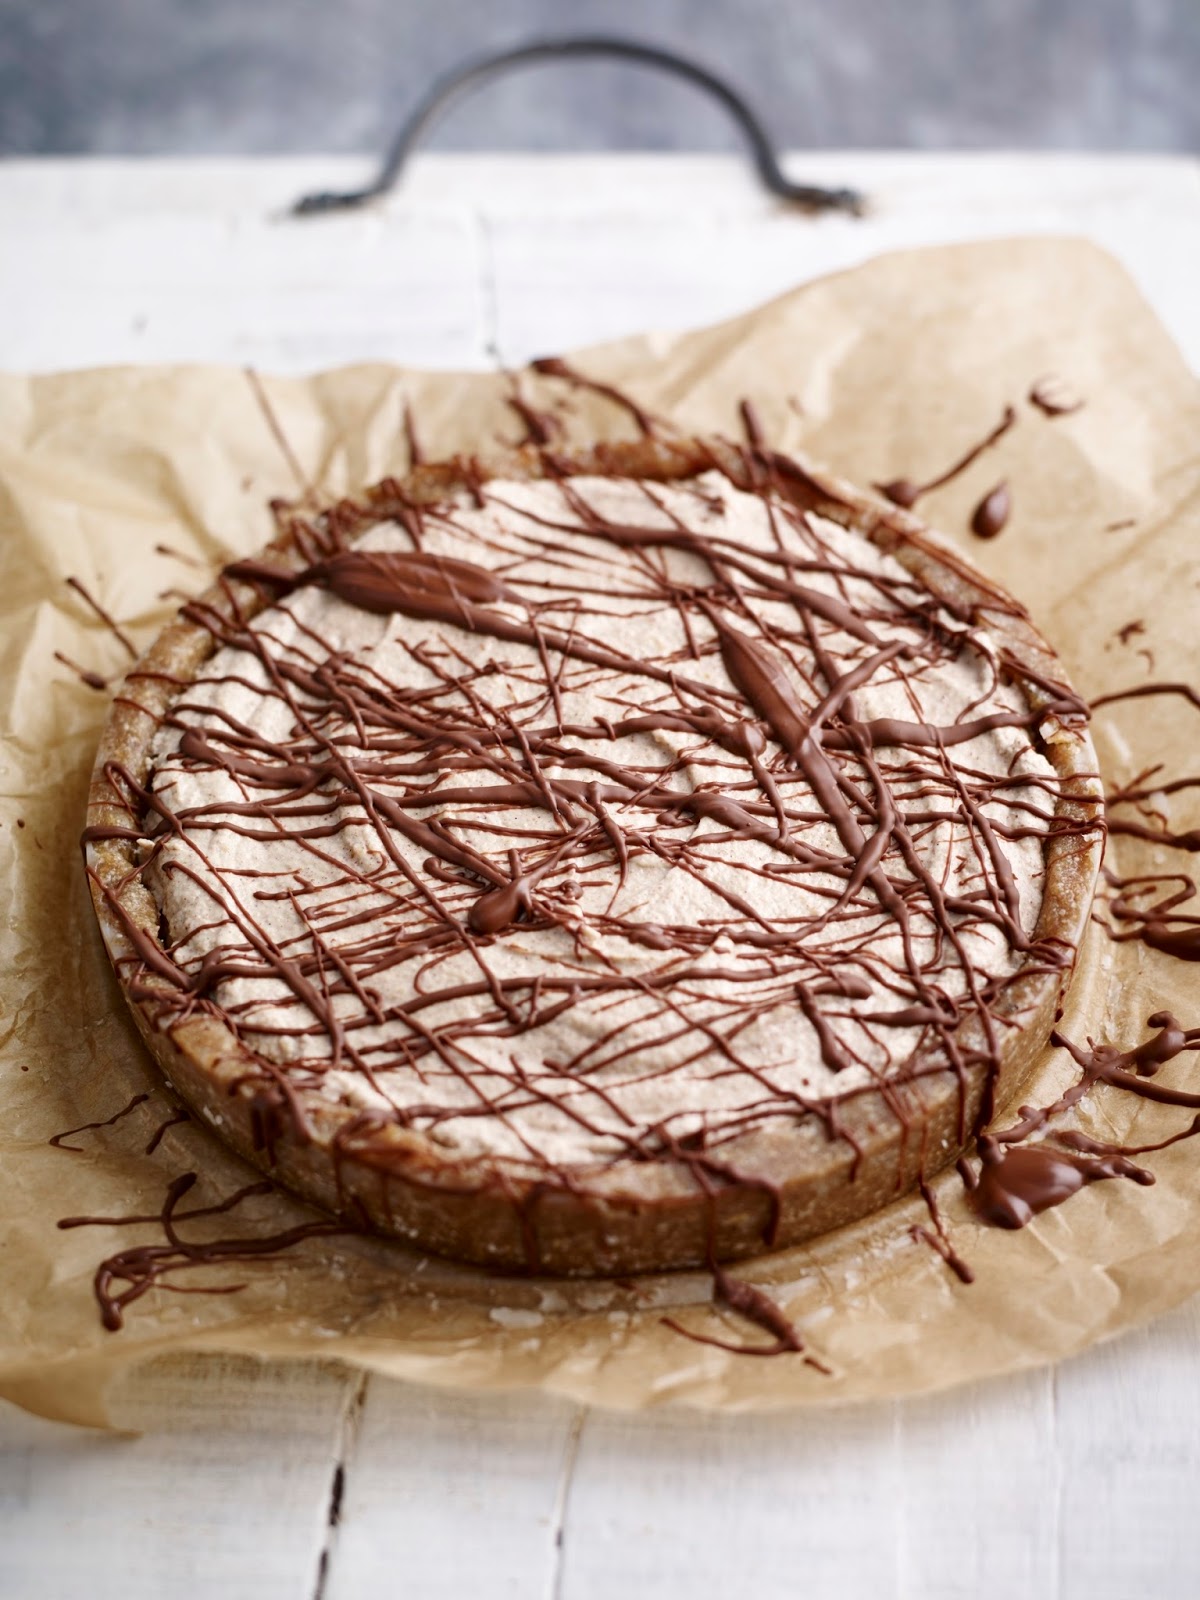 14 Sweet And Savoury Pie Recipes For #NationalPieDay